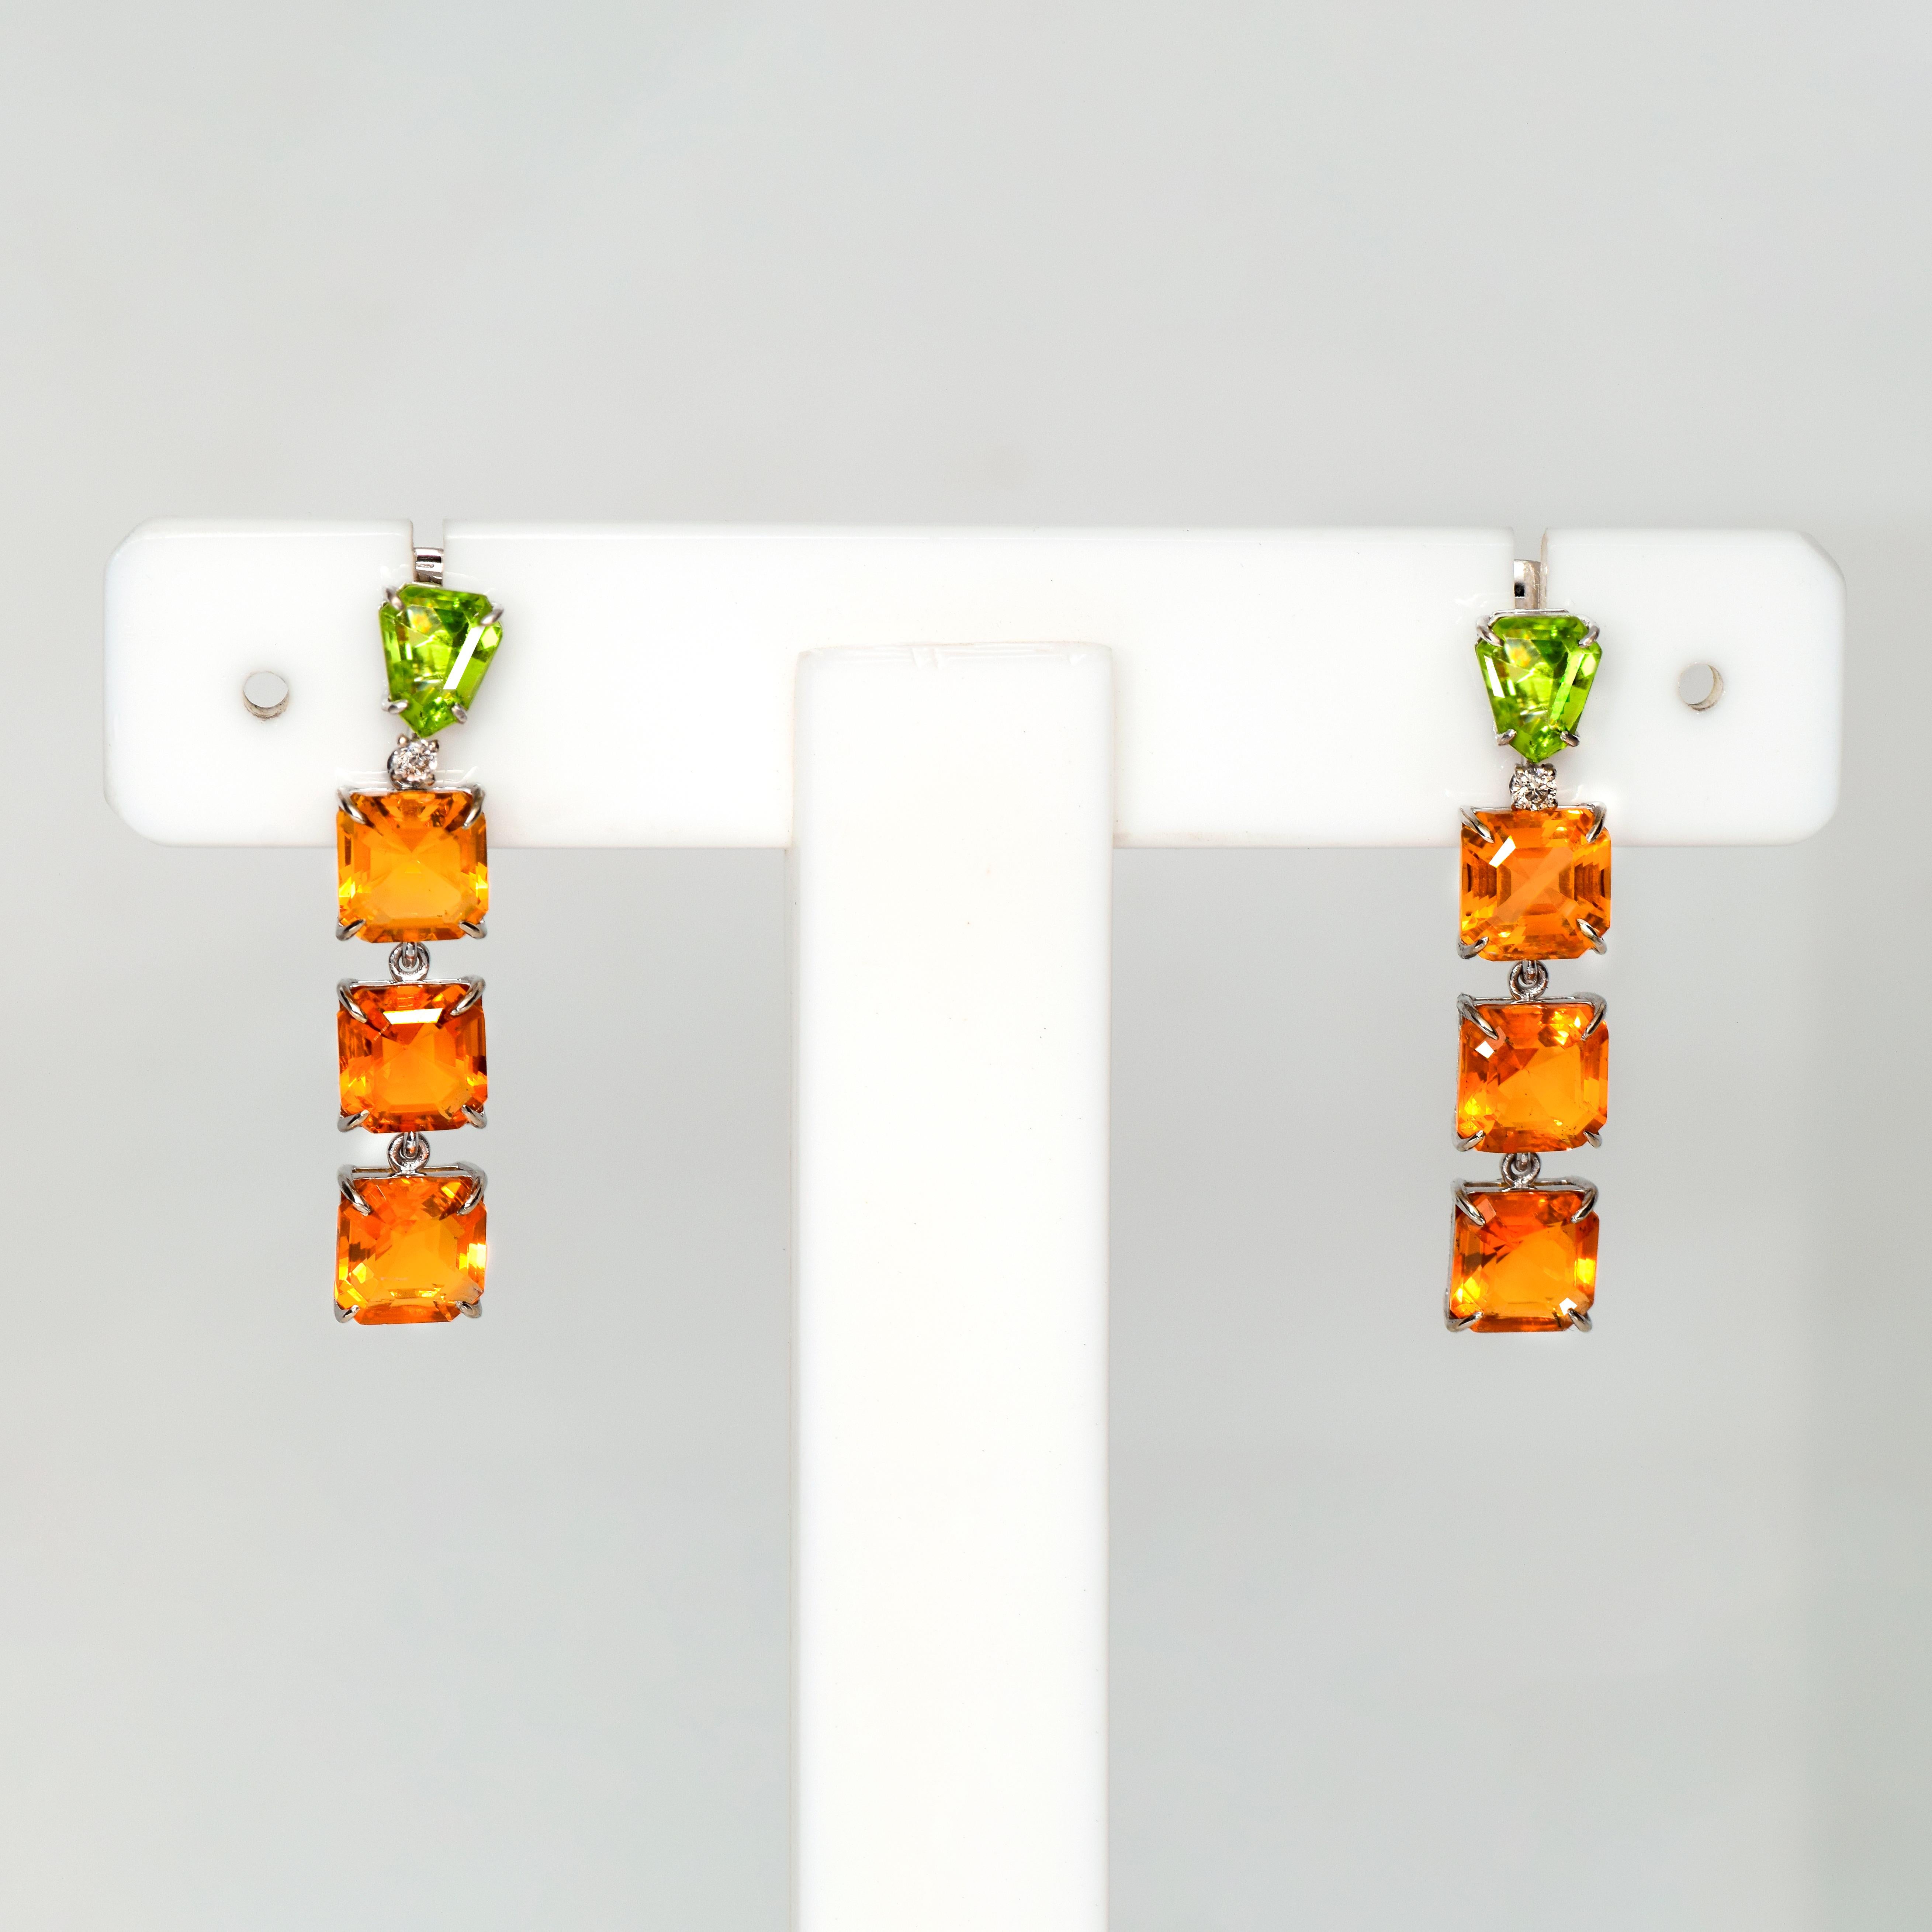 *IGI 14K 6.86 Carat Orange Fire Opal&Peridot Antique Art Deco Drop Earrings*

IGI-certified eight pieces of natural intense orange fire Opal weighing 6.86 ct set with genuine intense green Peridot weighing 1.70 ct and natural pink diamonds weighing